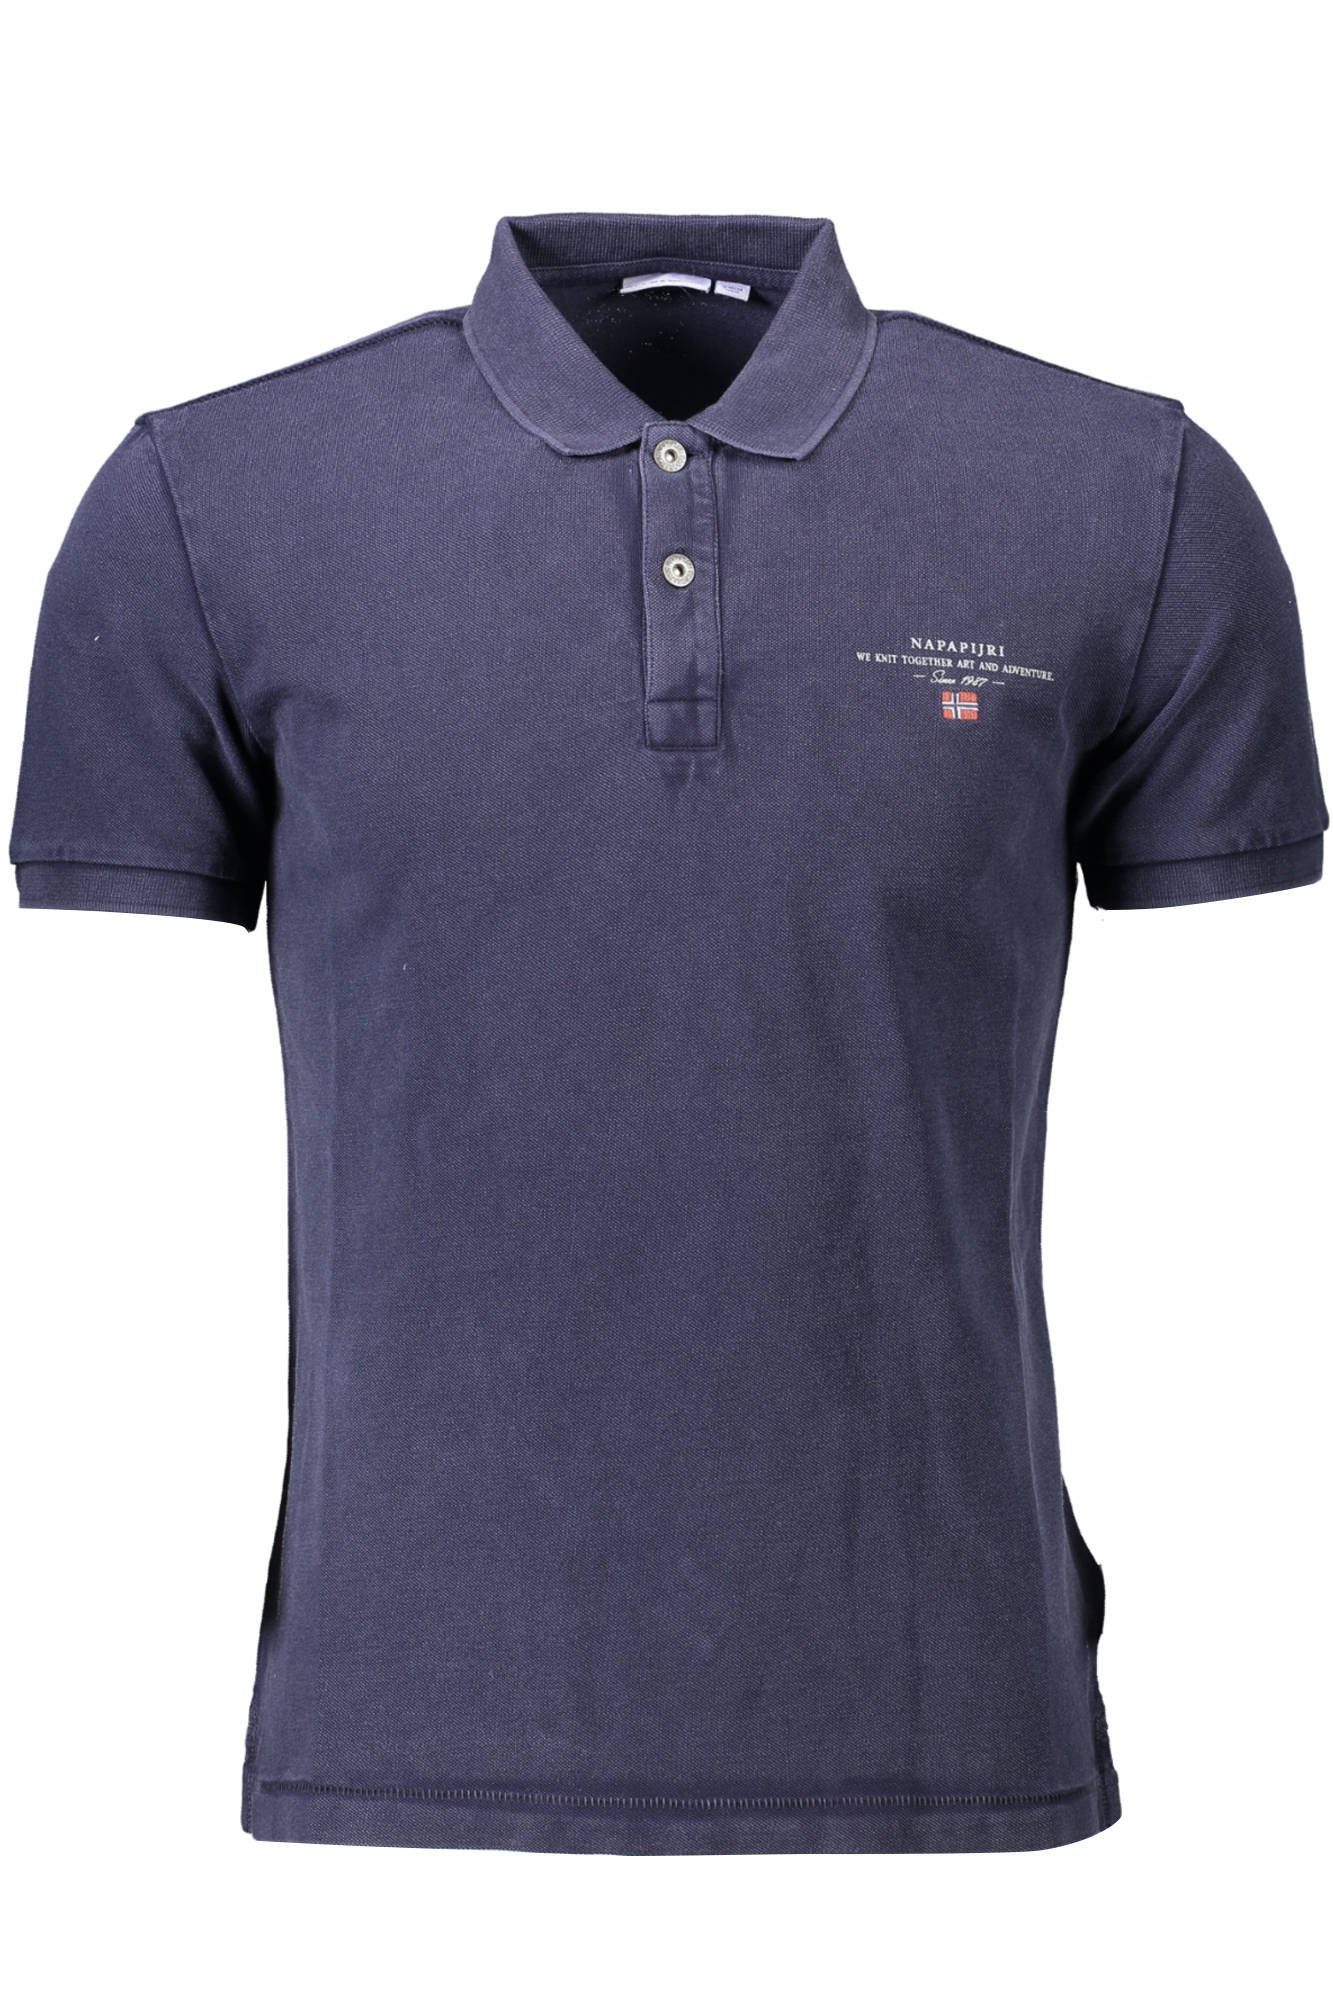 blu Napapijri Napapijri Poloshirt Polohemd Poloshirt Herren (176 Knöpfen blau T-Shirt mit marine) kurzarm,